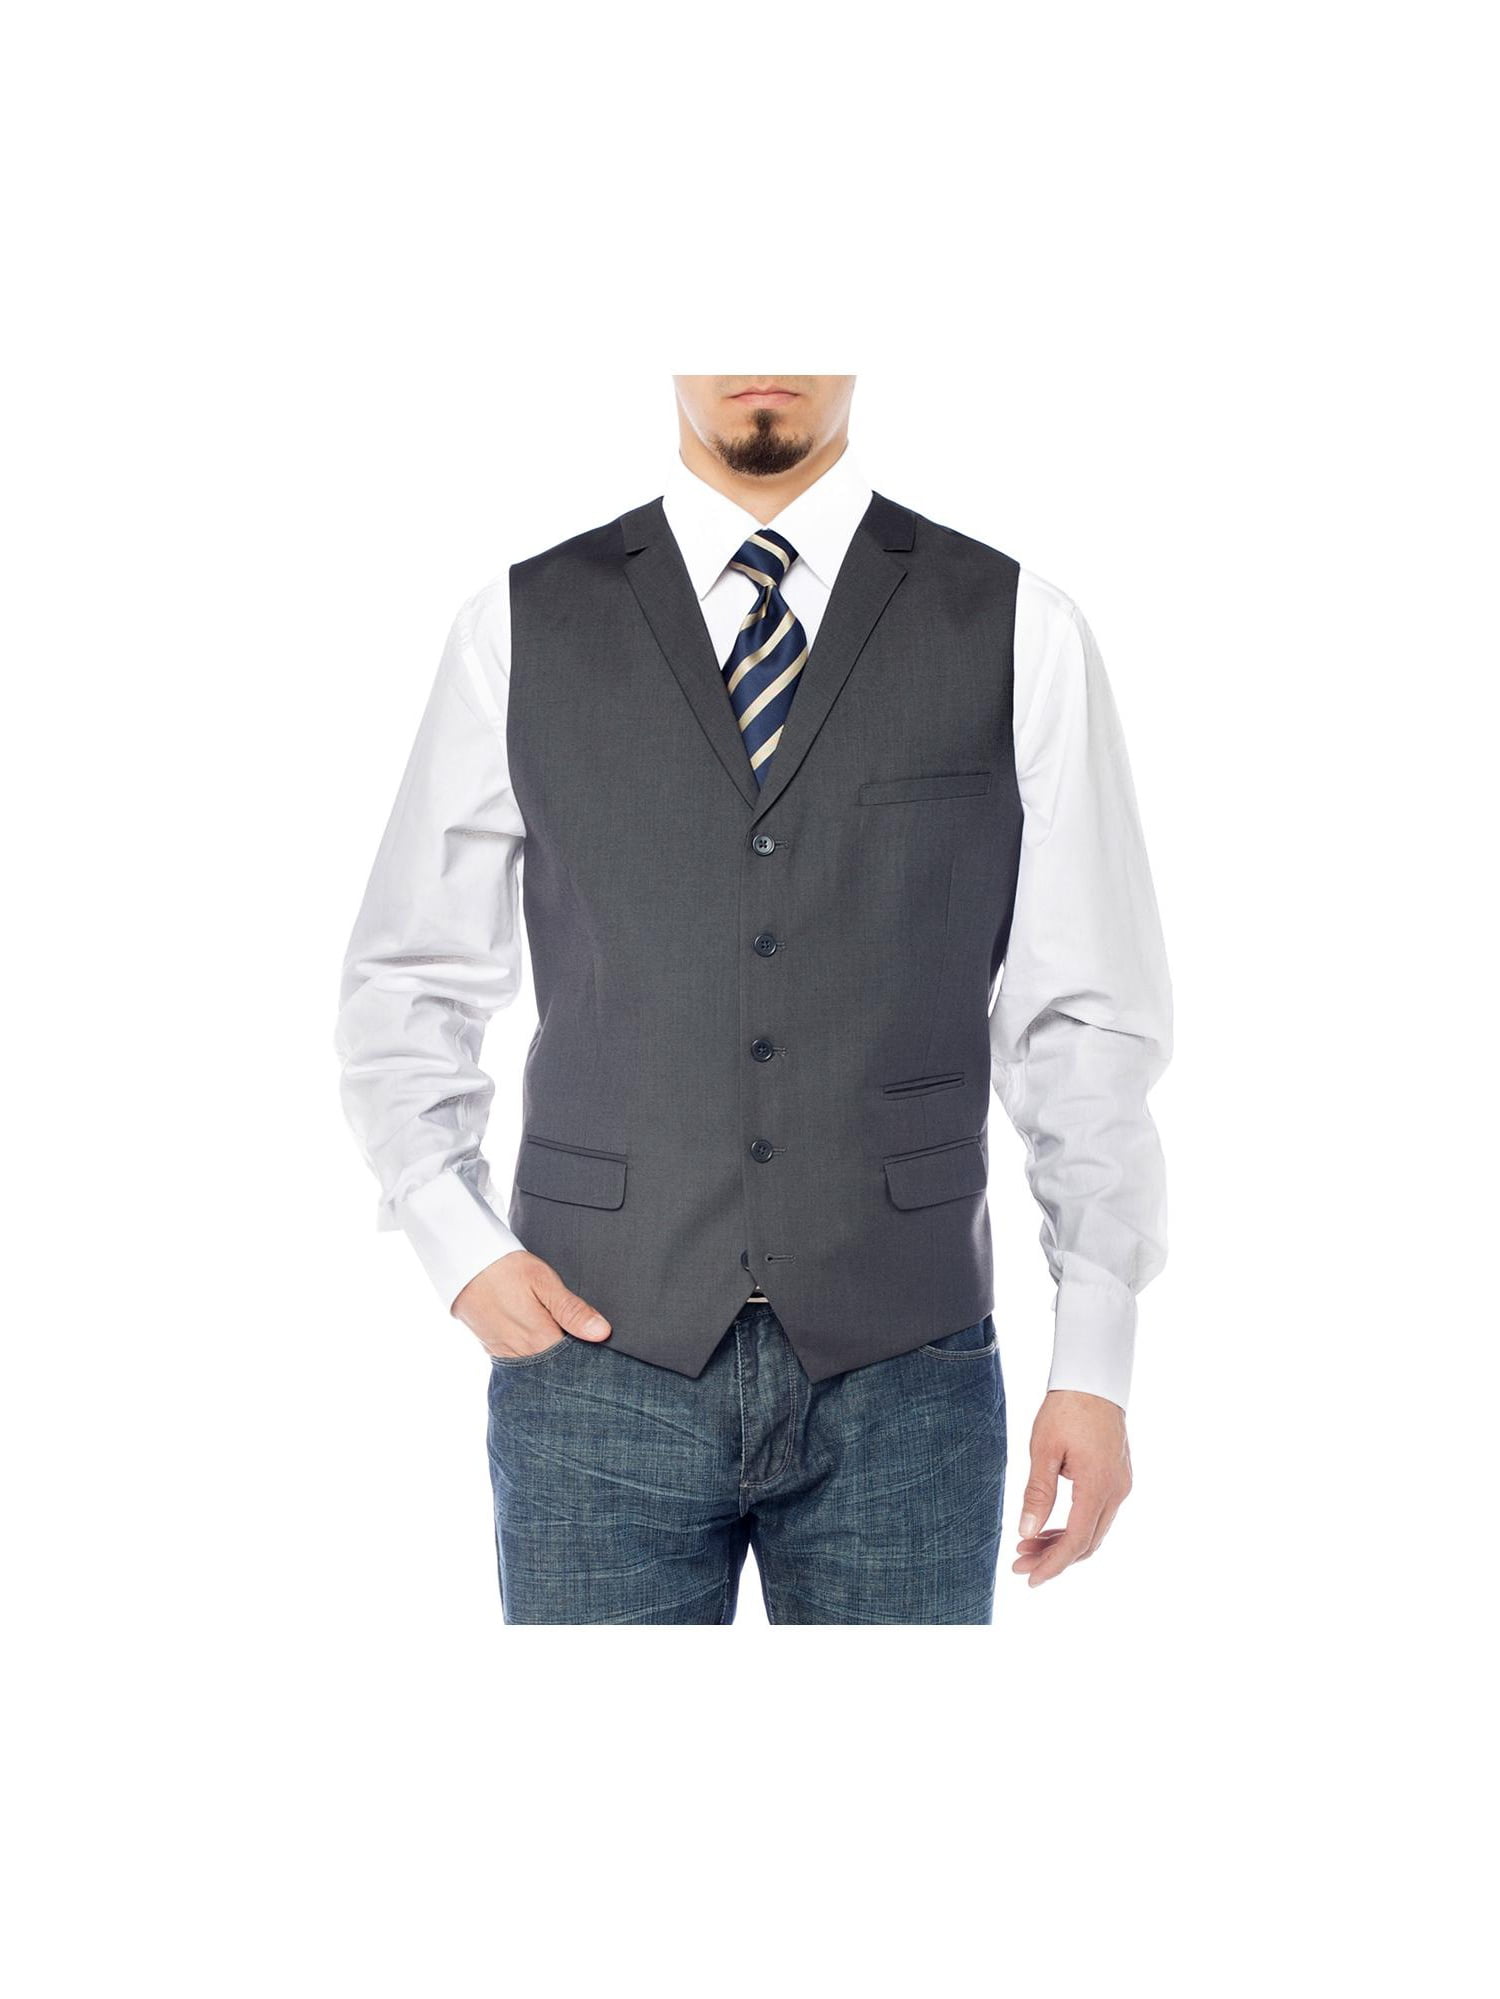 teknisk Hub Bug Salvatore Exte Men's Notch Lapel Casual Vest Modern Fit Dress Suit Waistcoat  Charcoal - Walmart.com